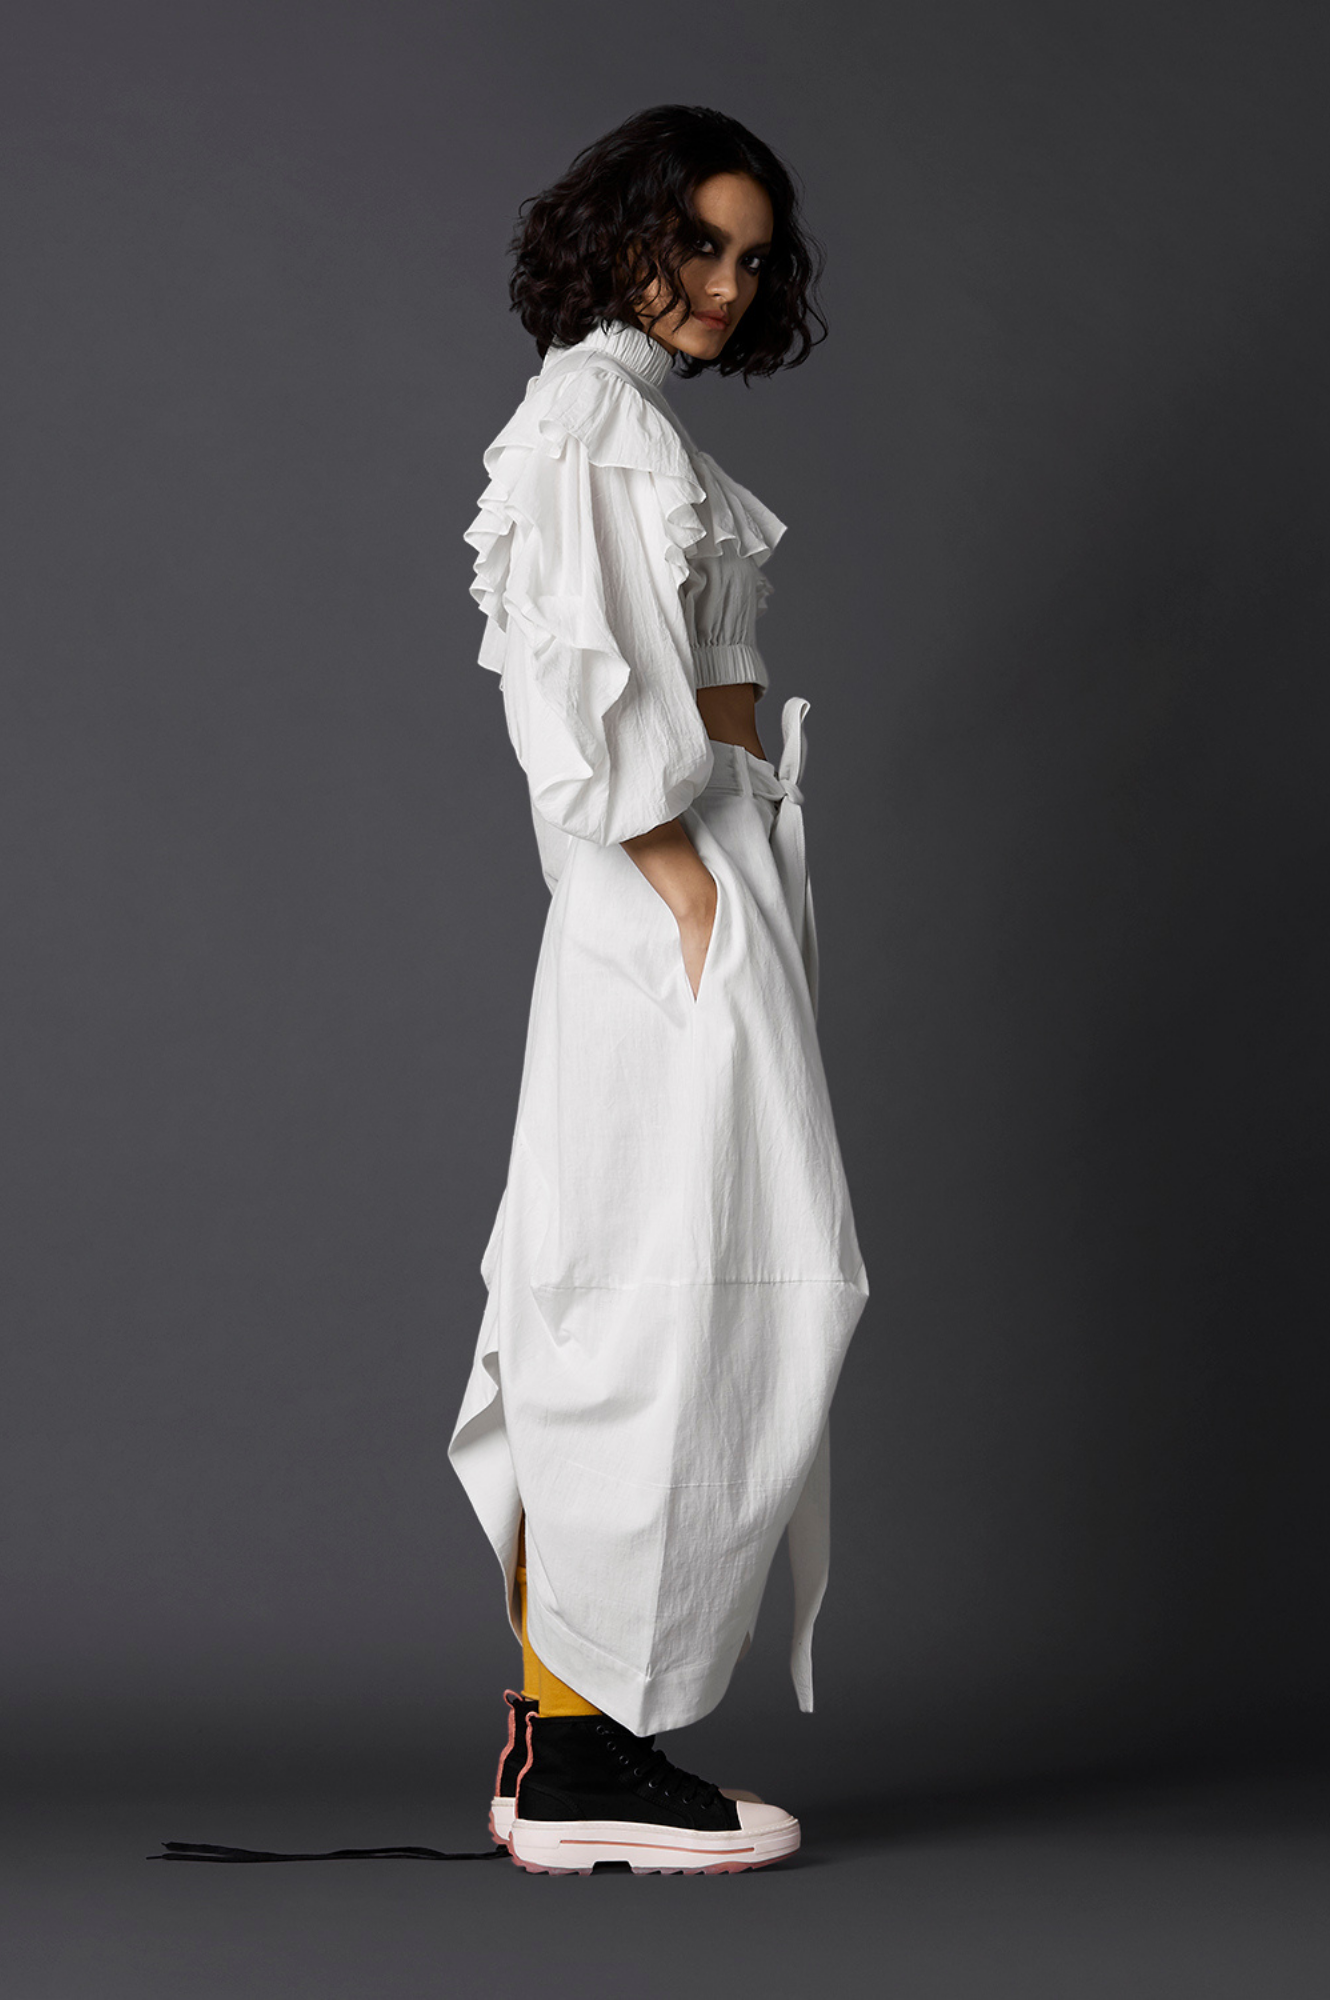 Adria Skirt in White